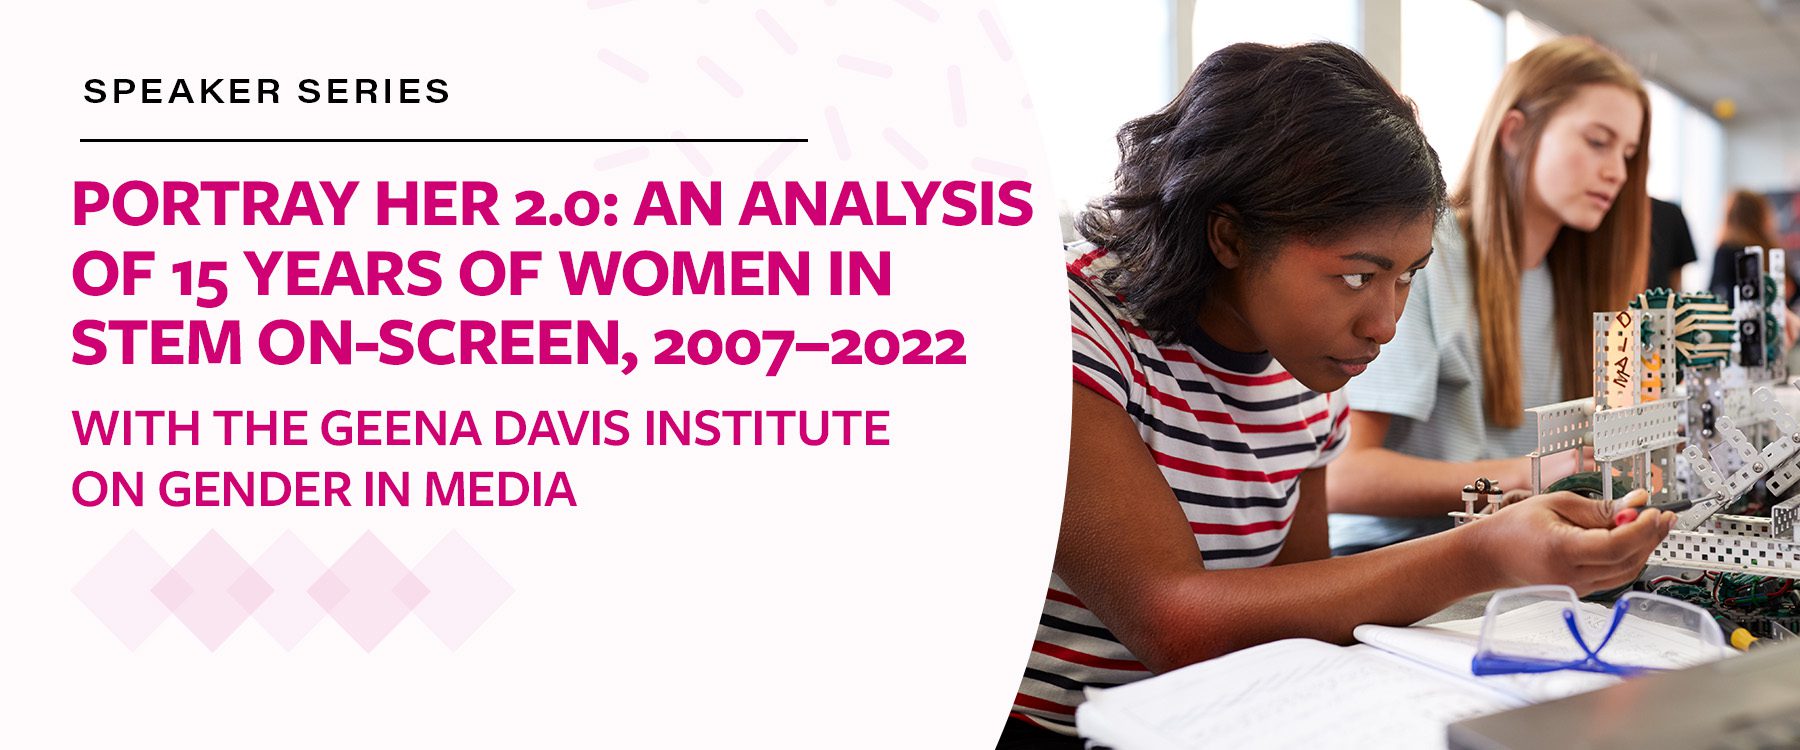 Speaker Series Portray Her 2.0: An Analysis of 15 Years of Women in STEM On-Screen, 2007-2022 with Geena Davis Institute on Gender in Media